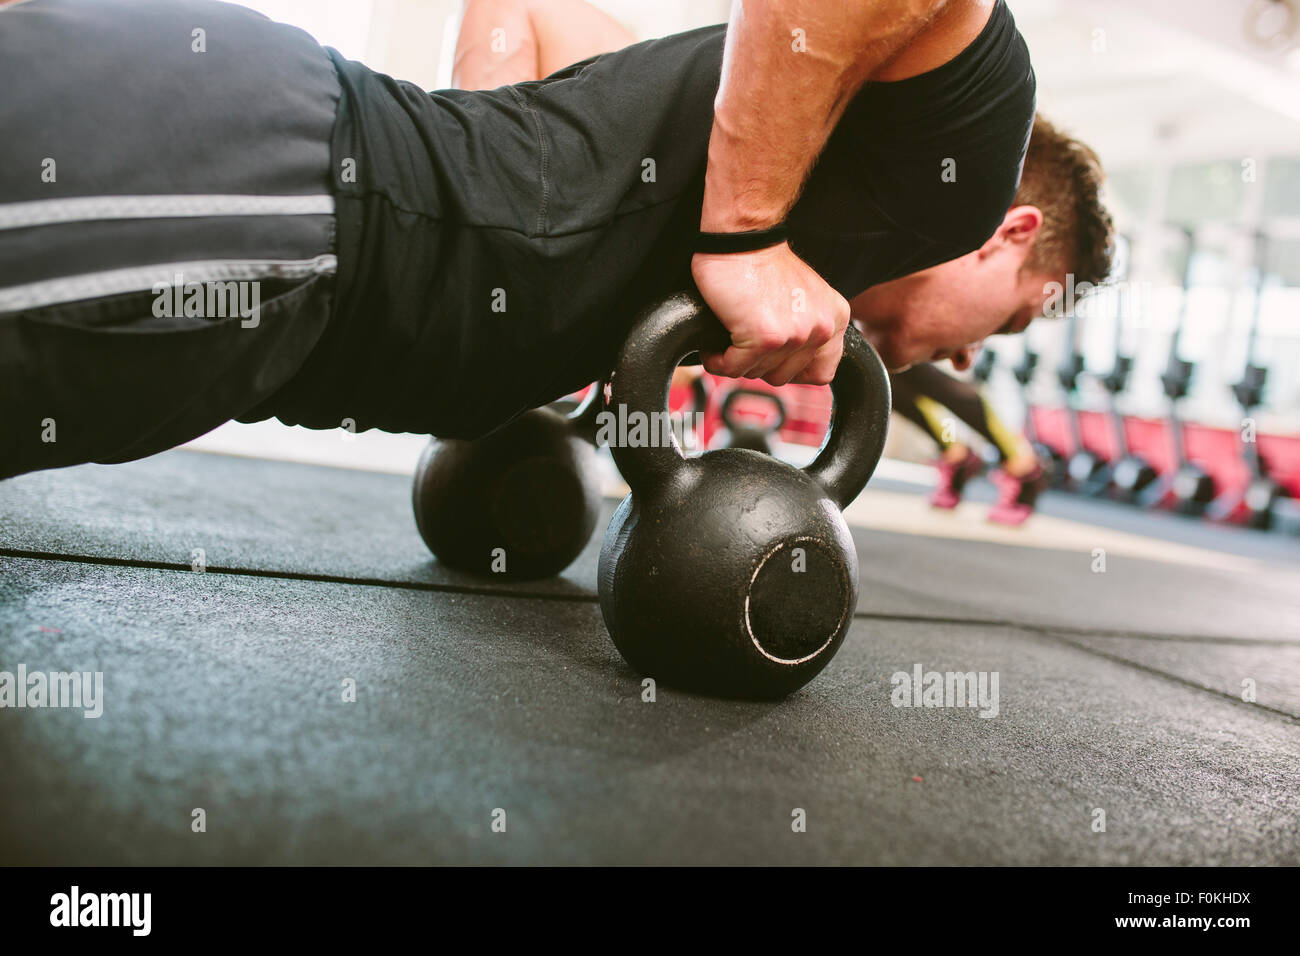 CrossFit athlete doing push-ups on kettlebells Stock Photo